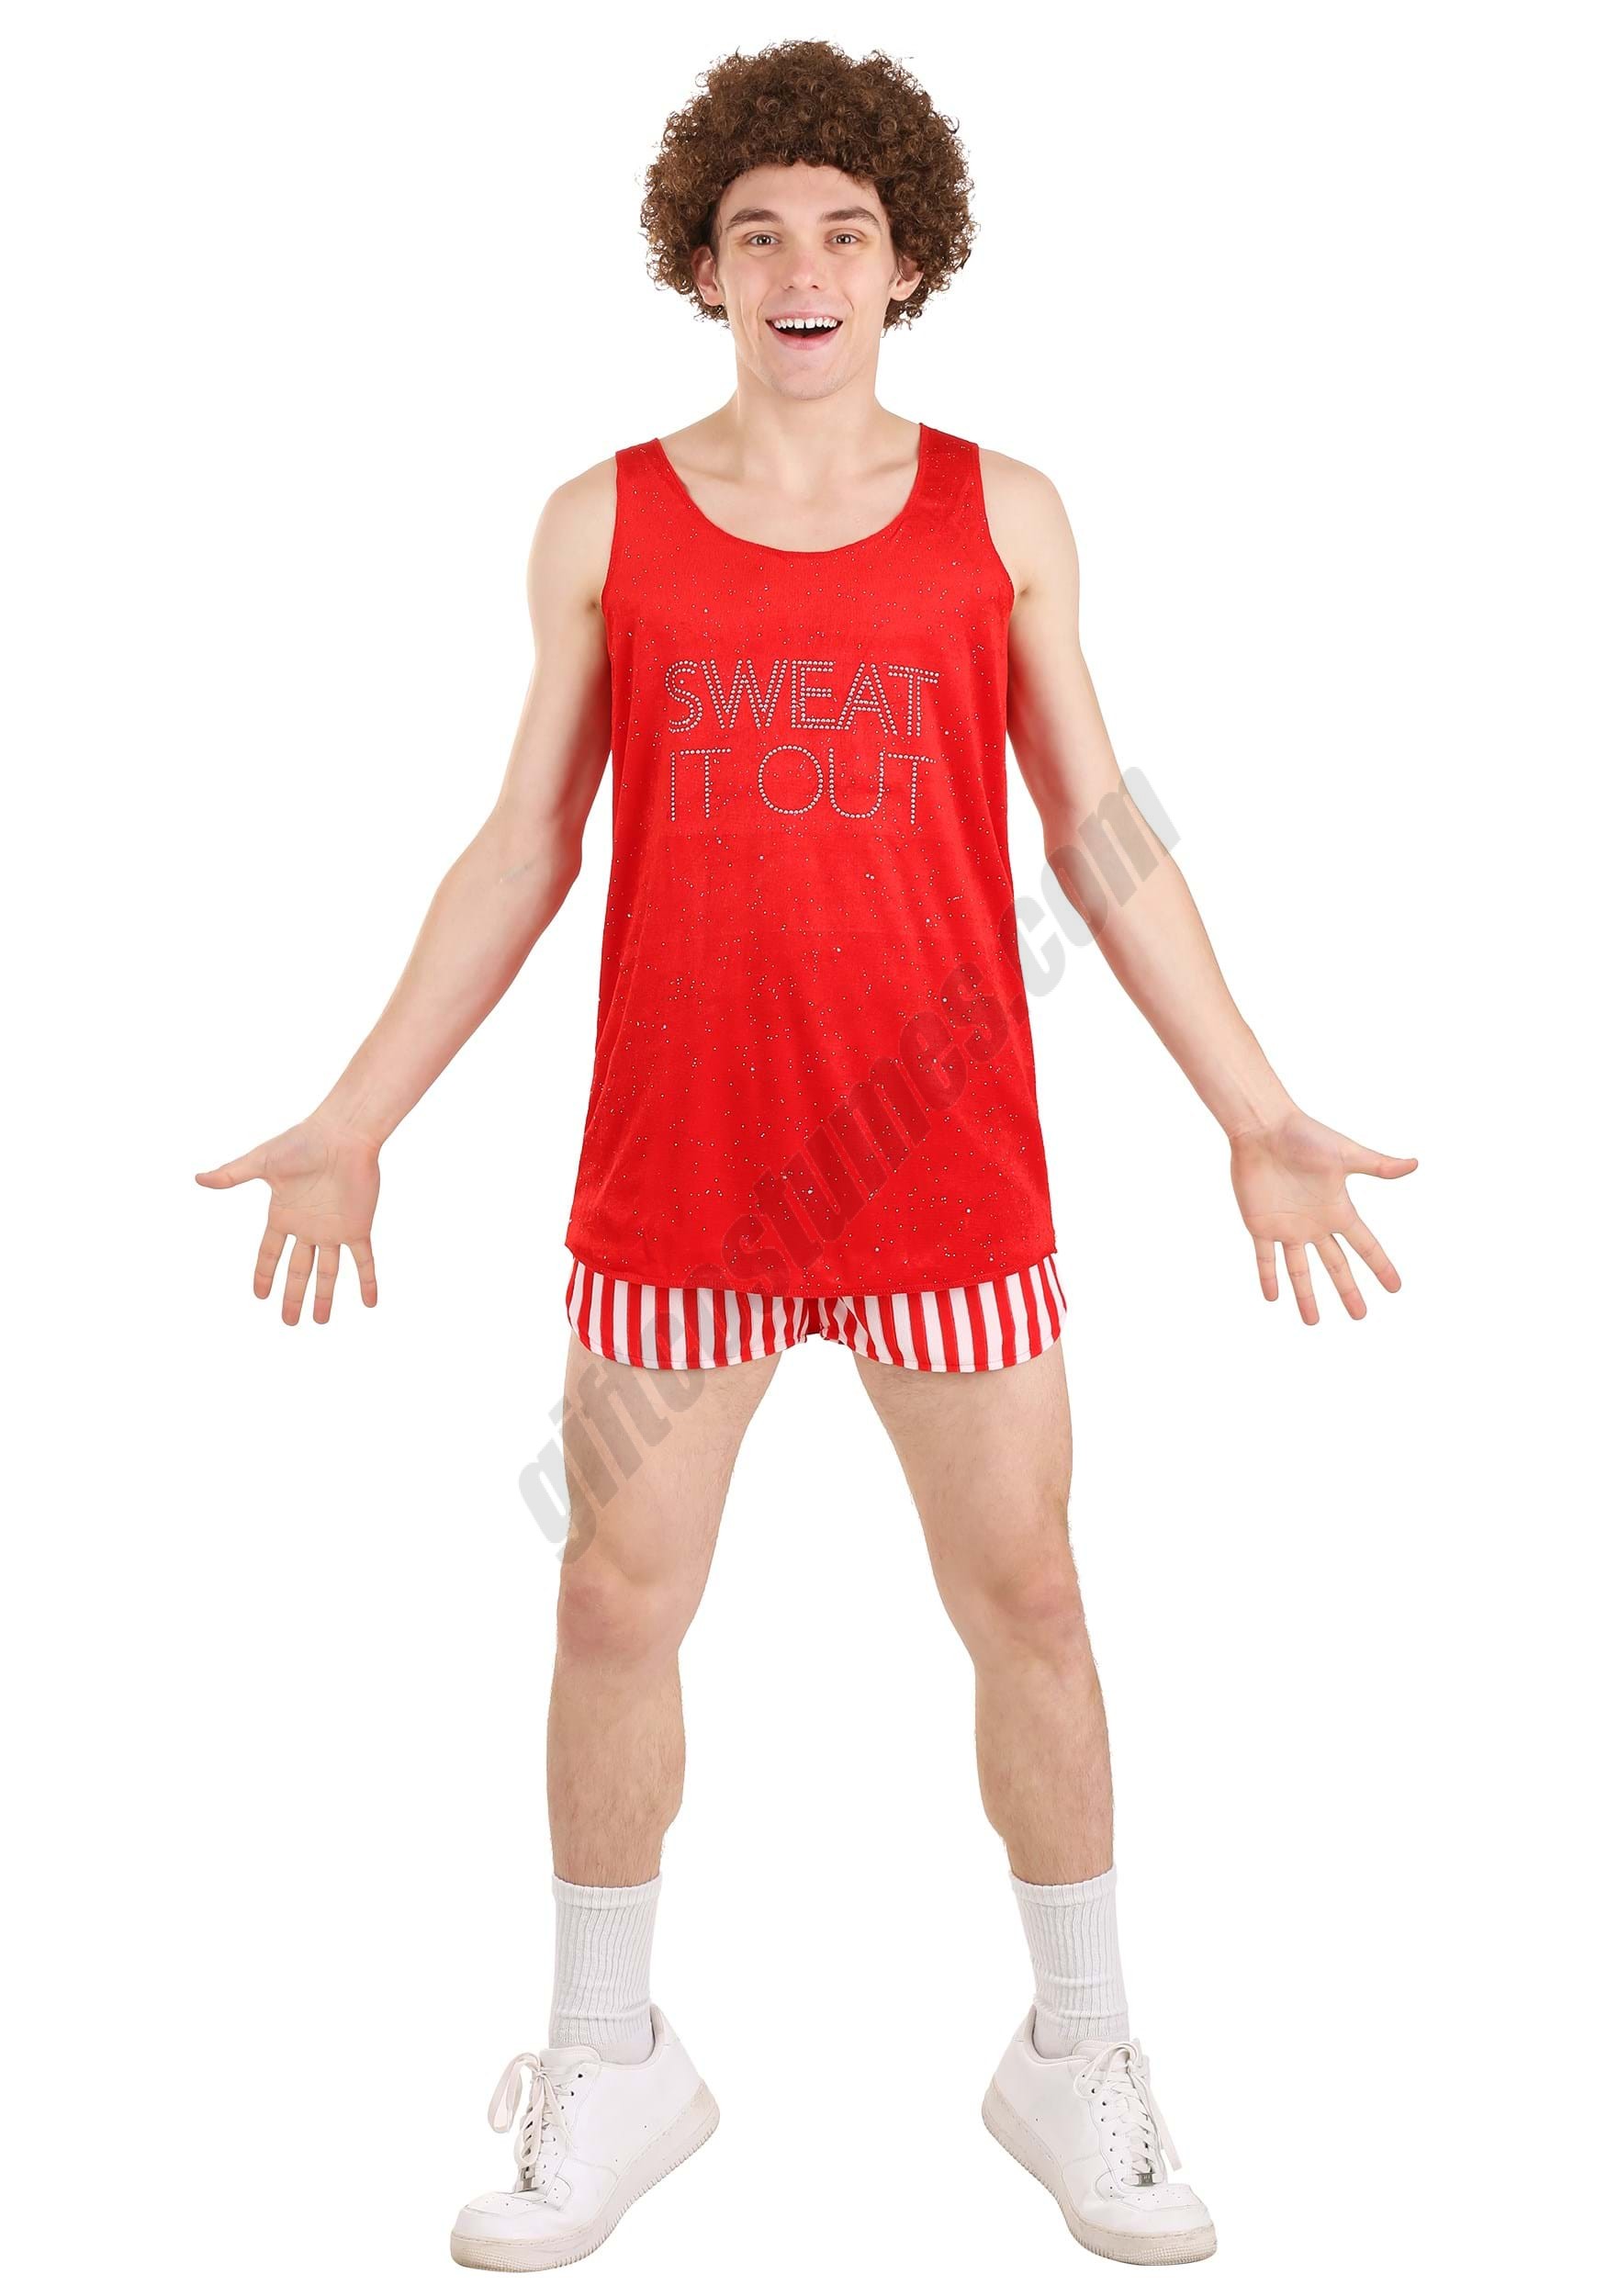 Richard Simmons Adult Costume - Men's - Richard Simmons Adult Costume - Men's